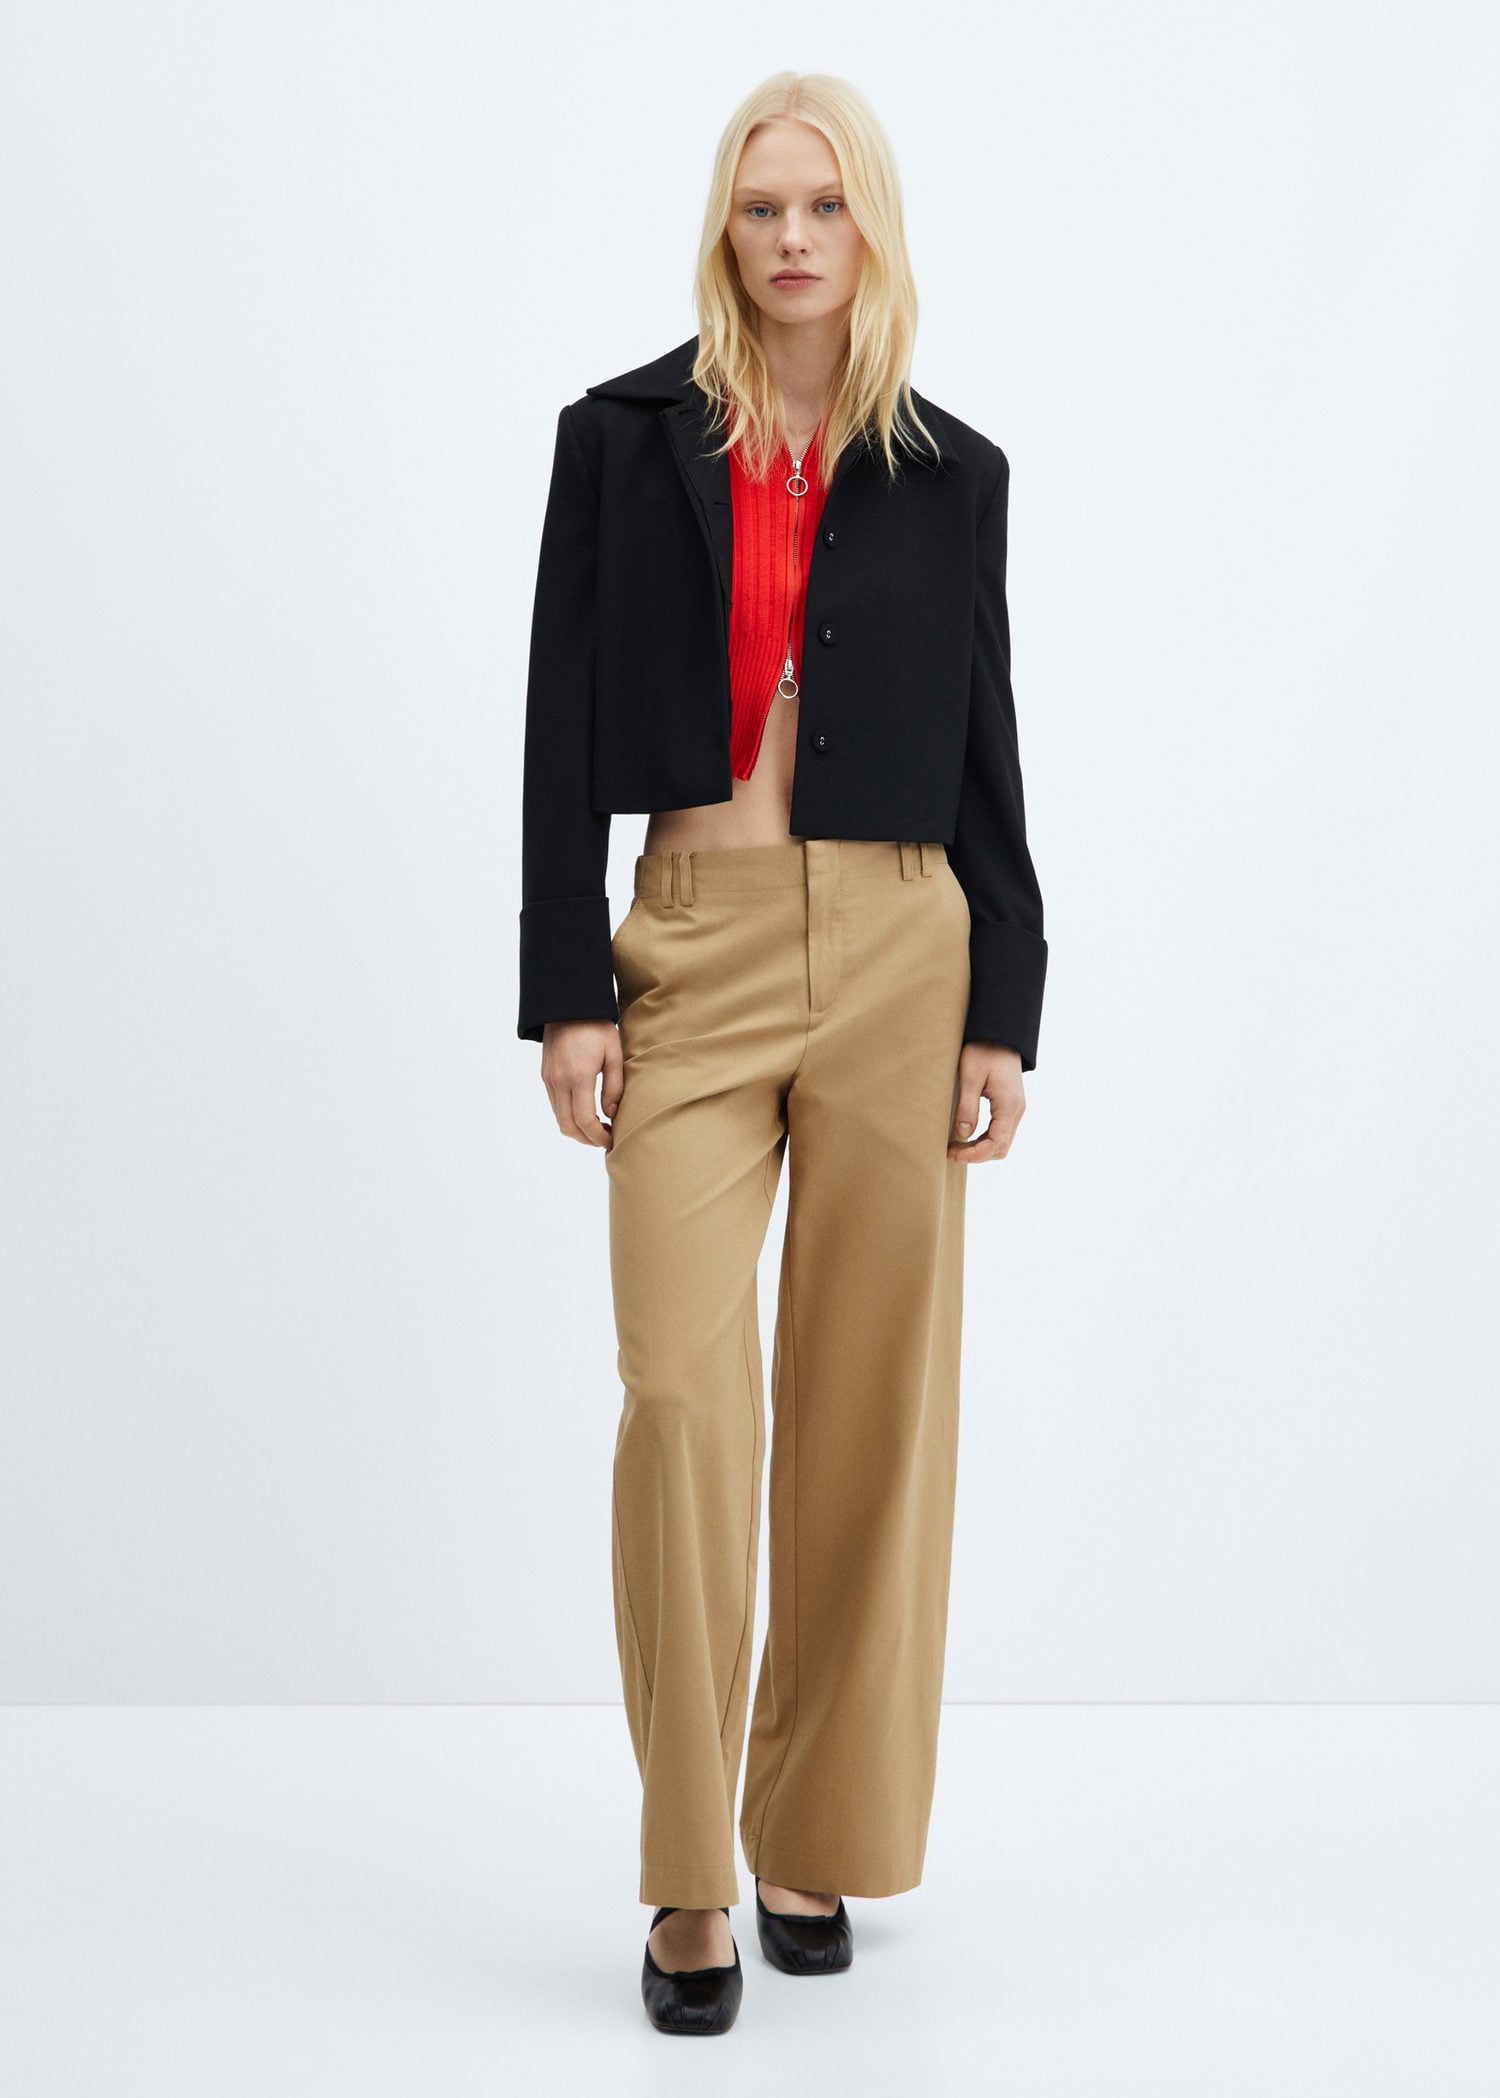 Buy Elegant Ladies Formal Pant Two Piece Suit | Fashion | DressFair.com